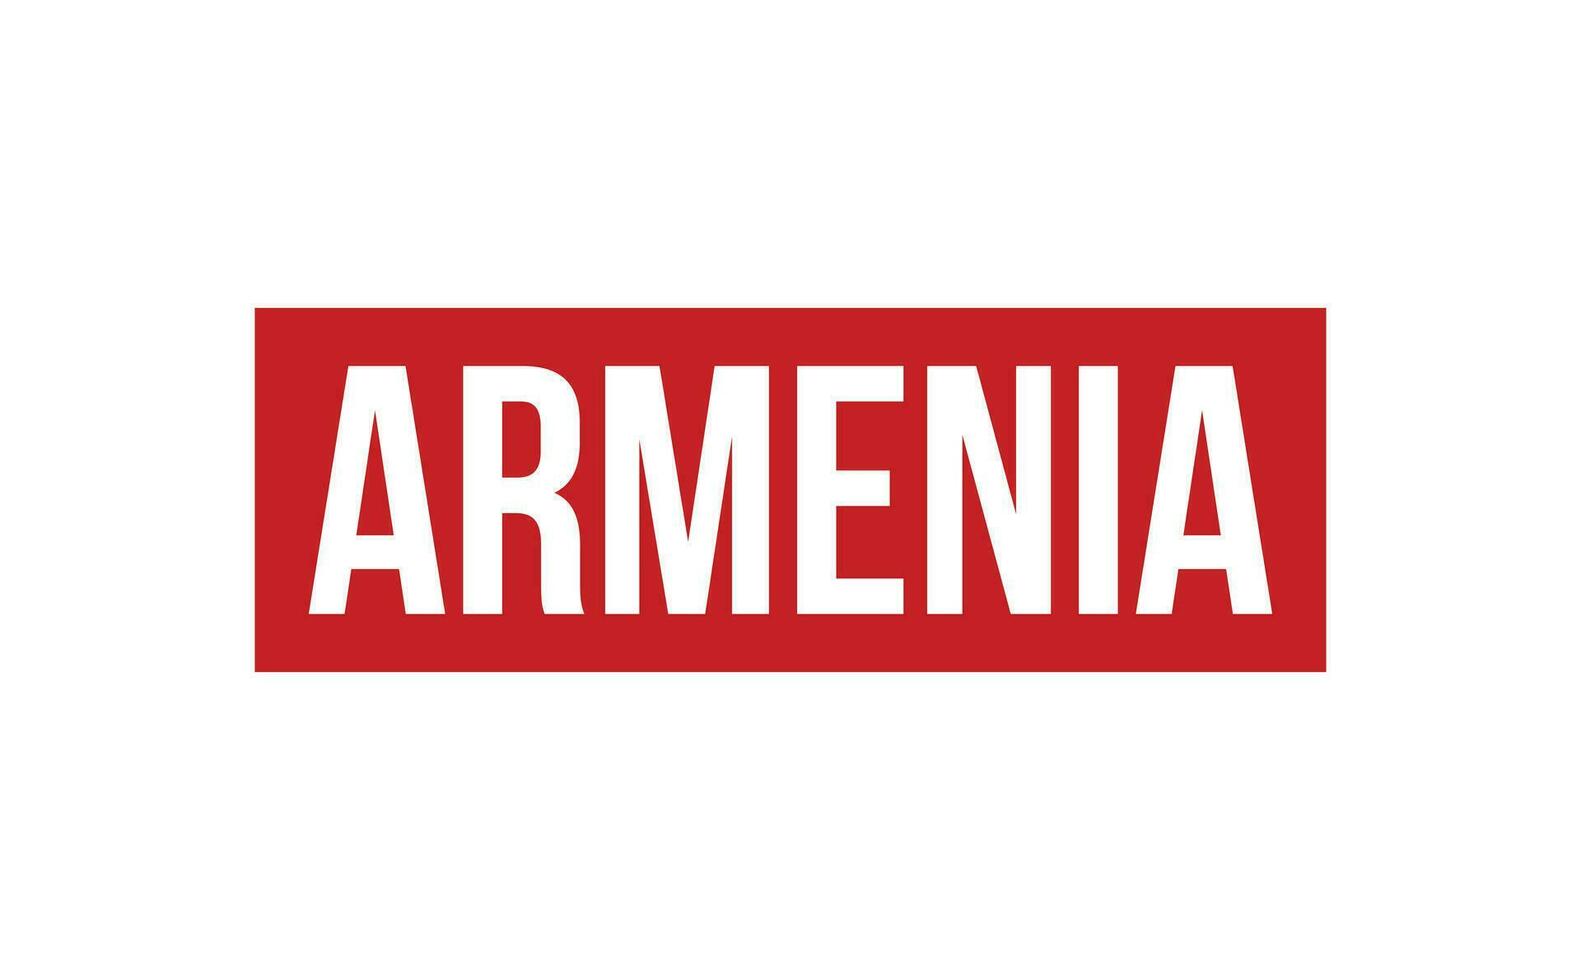 Armênia borracha carimbo foca vetor